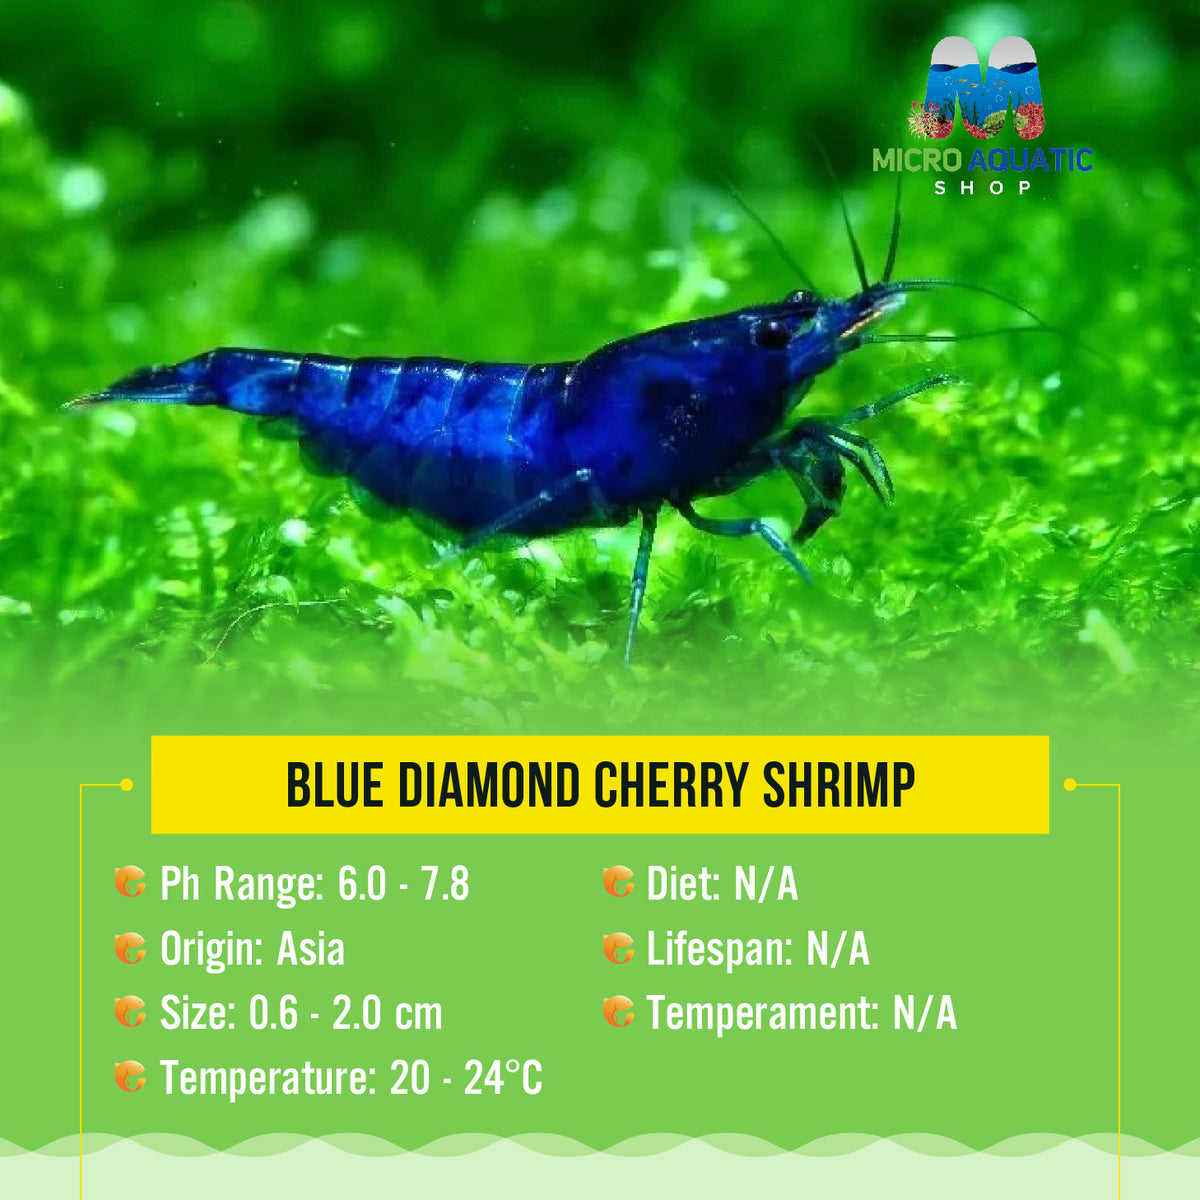 Buy 10 get 5 Blue Diamond Cherry Shrimp